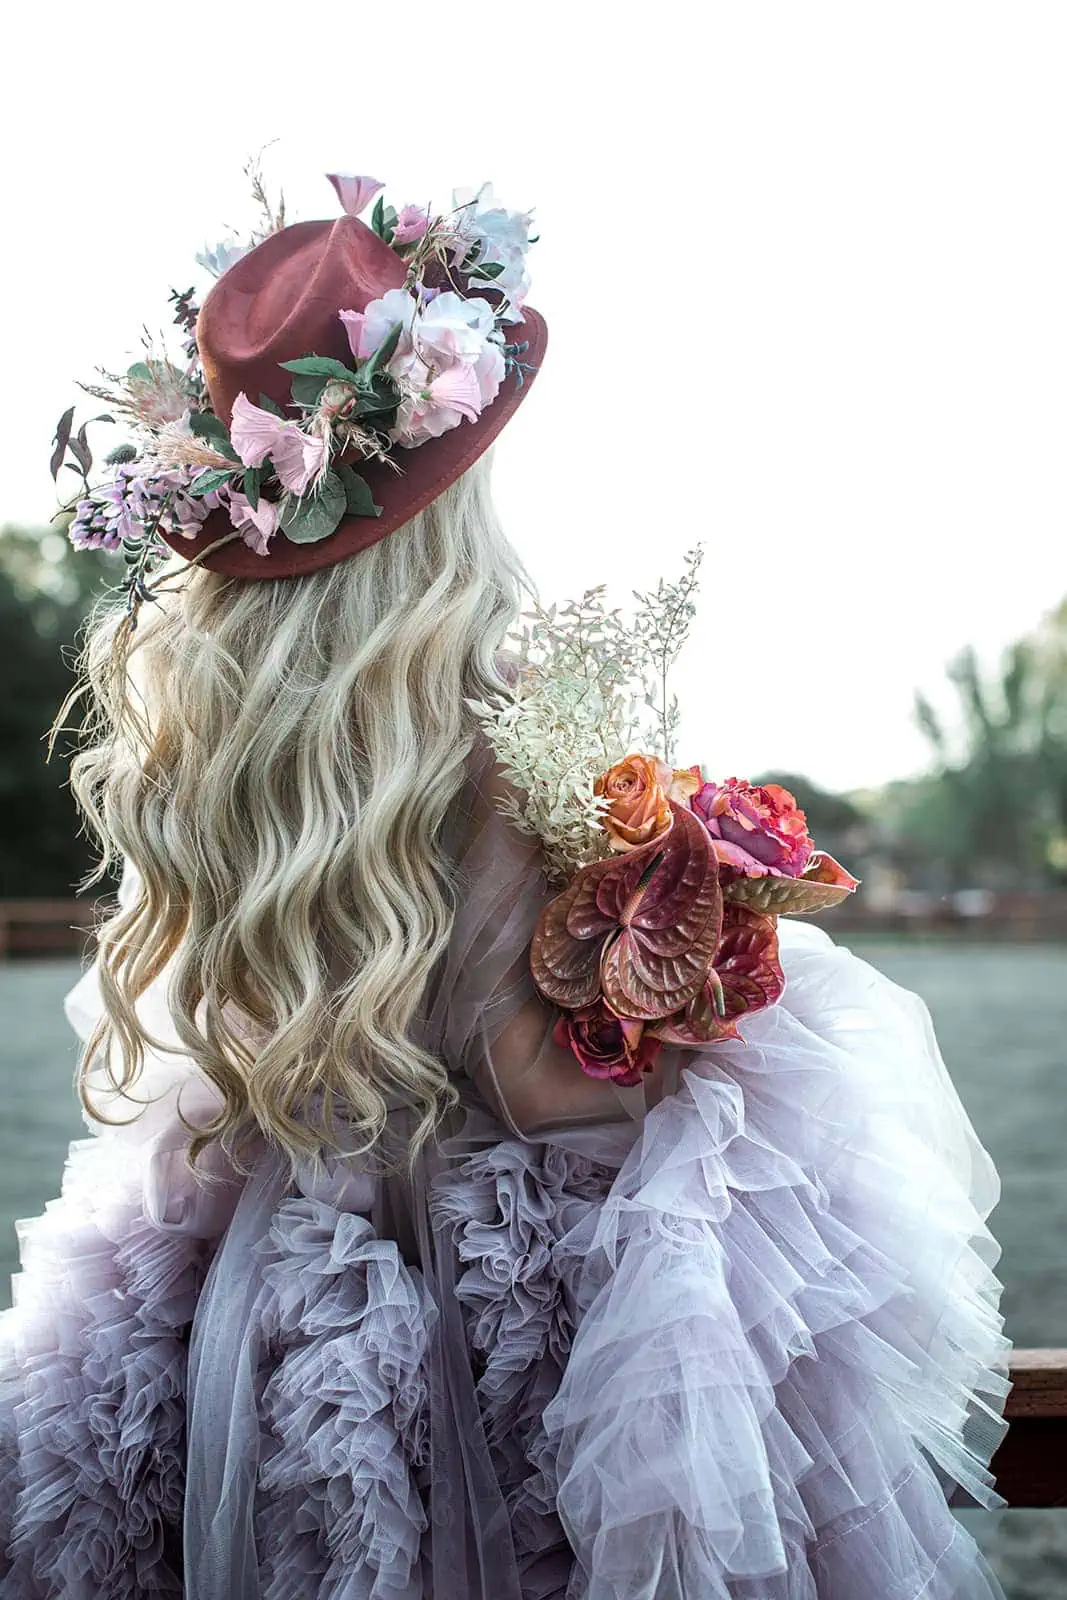 Model wears burgundy hat with flowers